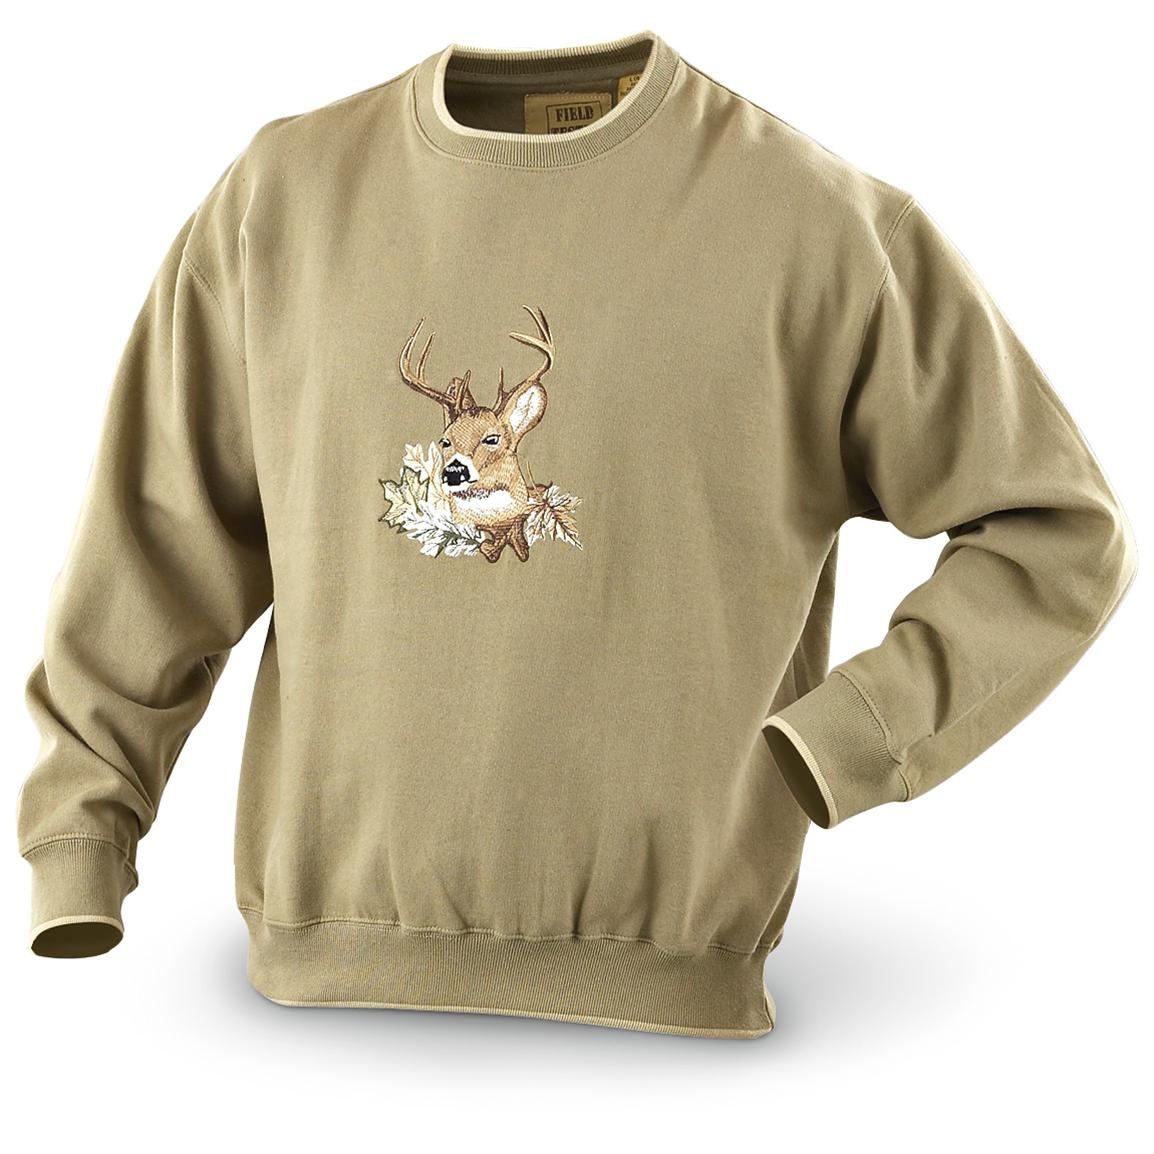 Outdoor Life Embroidered Wildlife Sweatshirt 149378 Sweatshirts Hoodies At Sportsman S Guide [ 1154 x 1154 Pixel ]